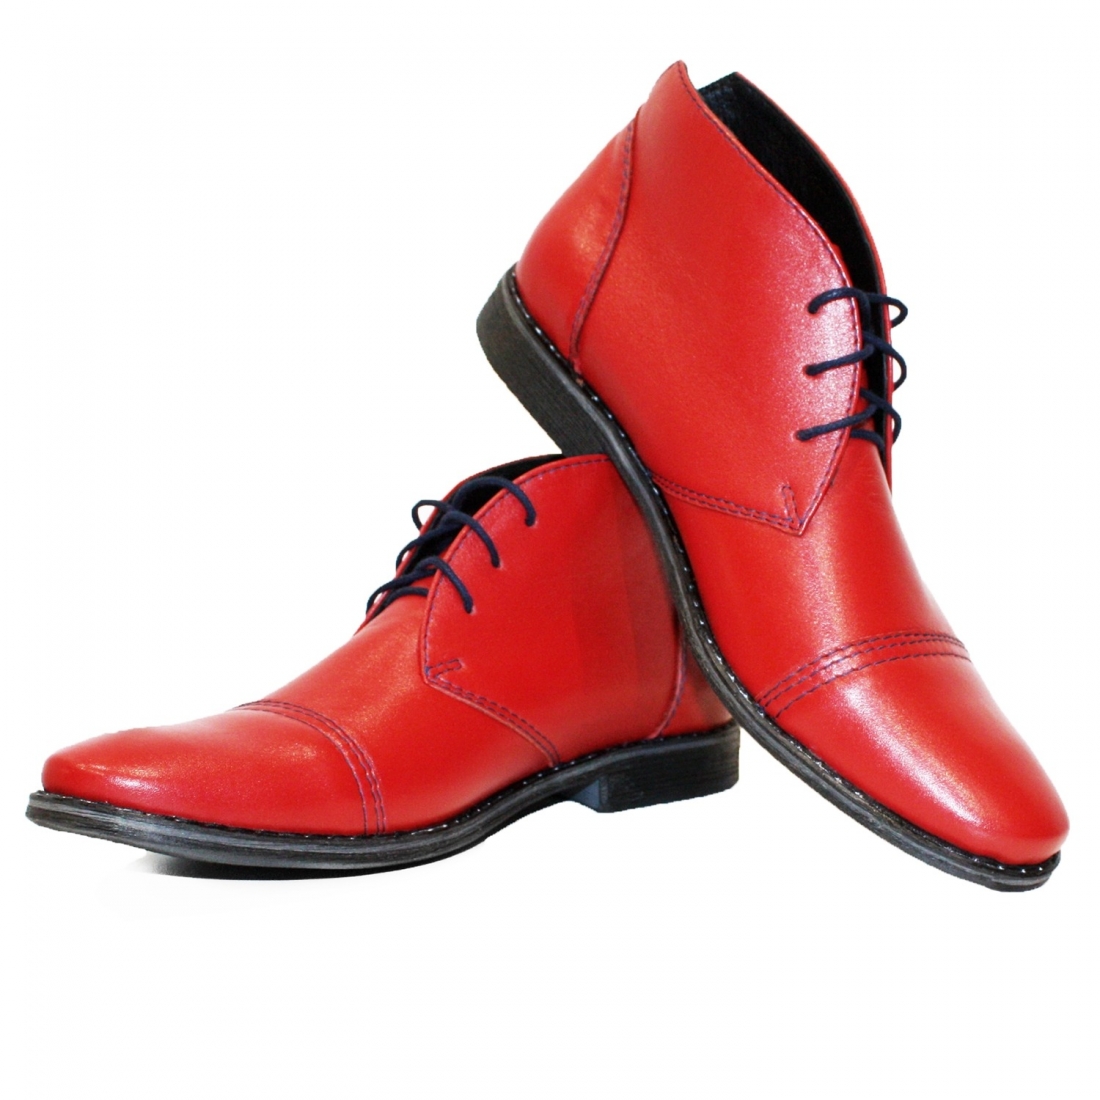 Modello Vurello - Desert Boots - Handmade Colorful Italian Leather Shoes